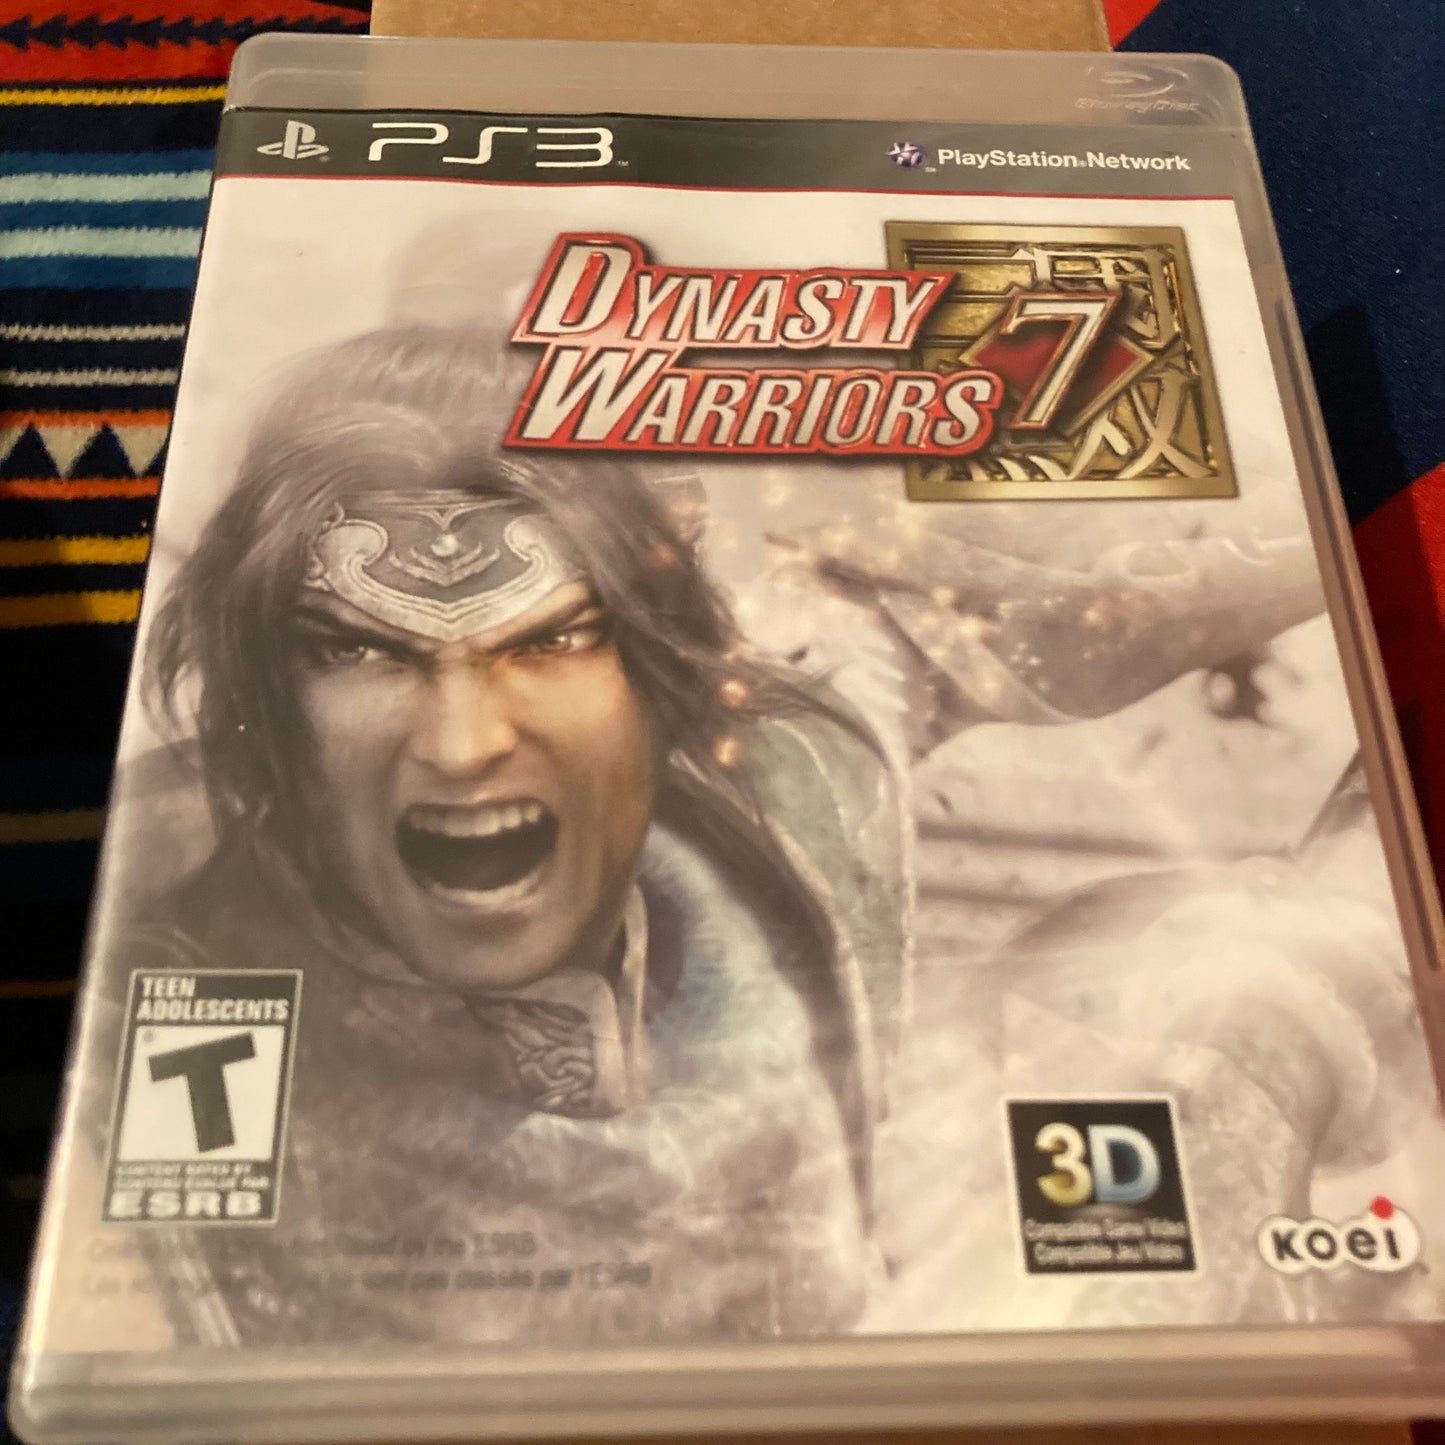 PS3 - Dynasty Warriors 7